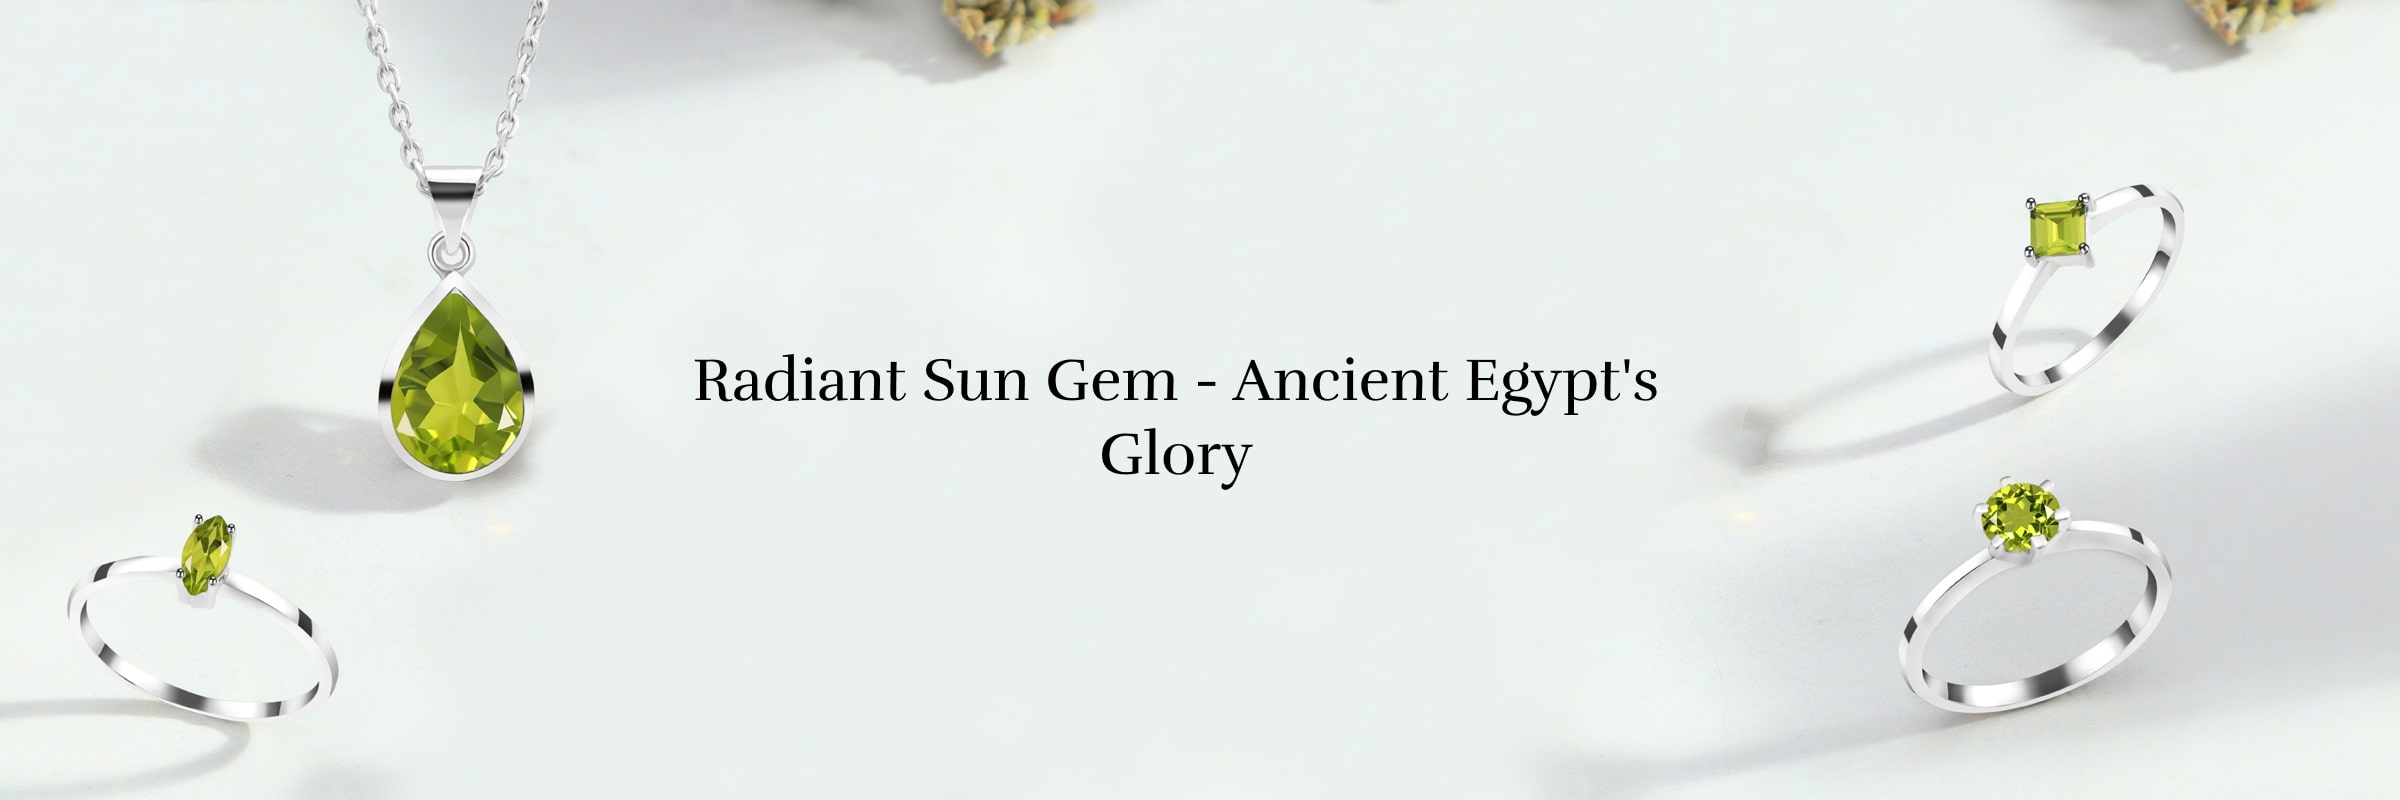 Ancient Egypt: The Gem of the Sun